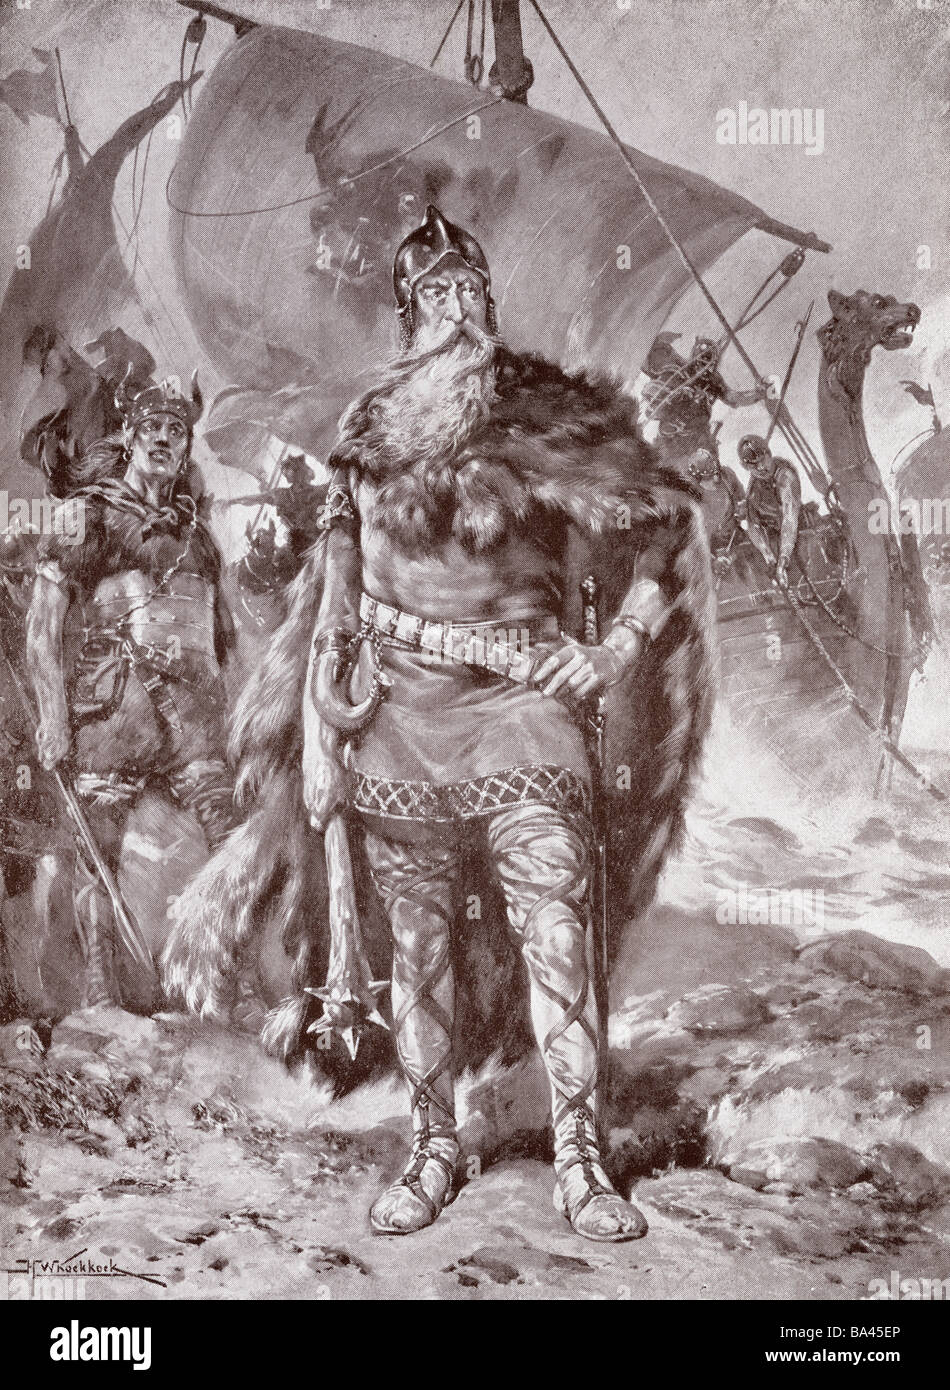 Hardecanute, Viking Ruler, Danish Monarch & English King